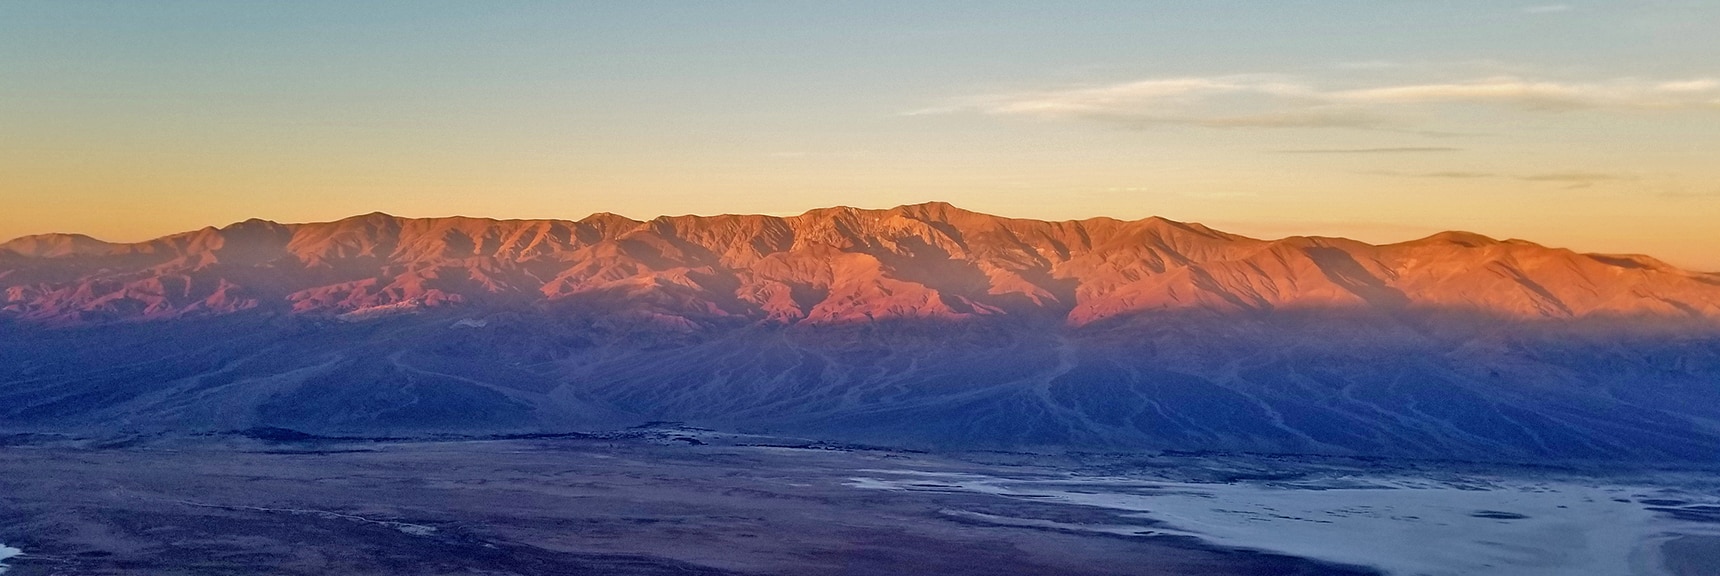 Telescope Peak Sunrise from Dante's View | Death Valley National Park, California